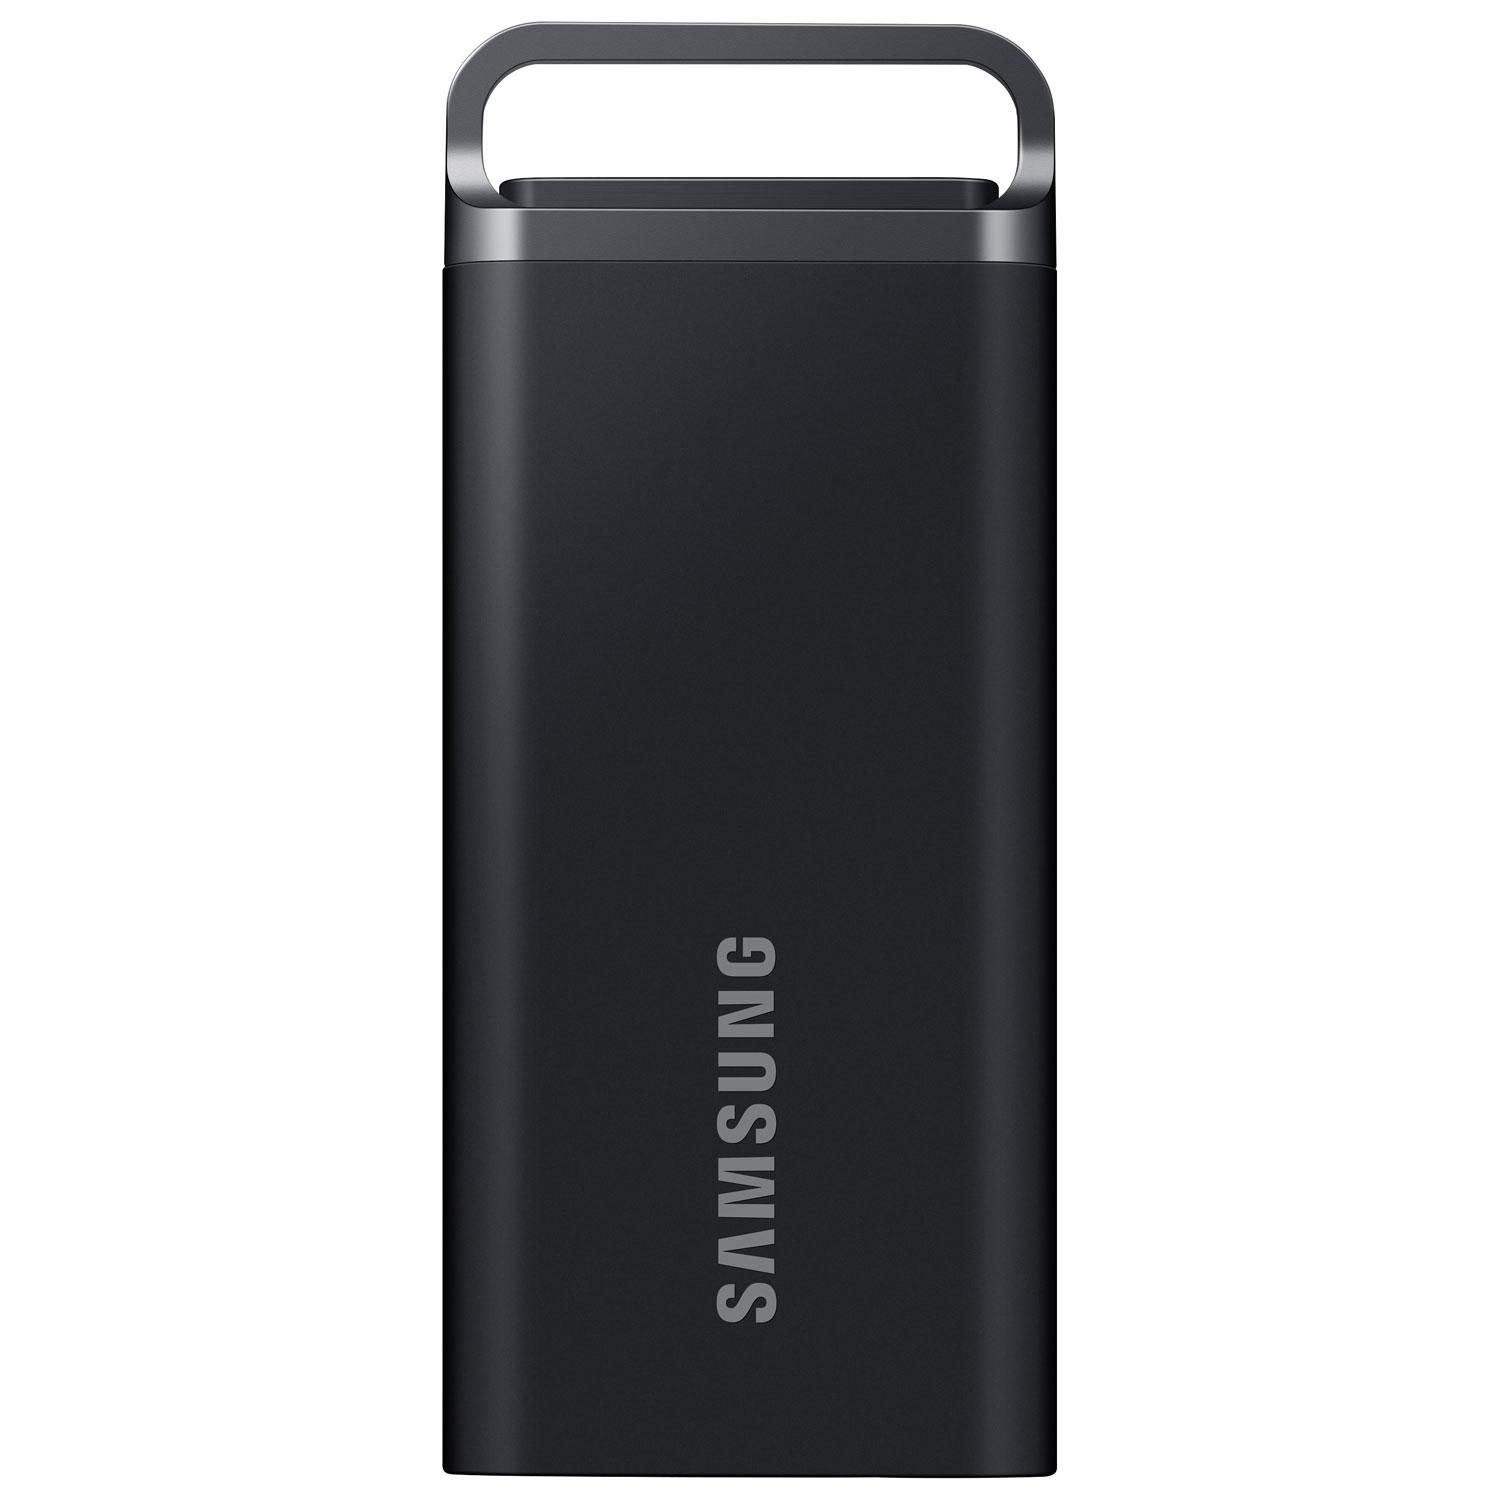 Samsung T5 EVO 8TB USB 3.2 External Solid State Drive (MU-PH8T0S/AM) - Black - English